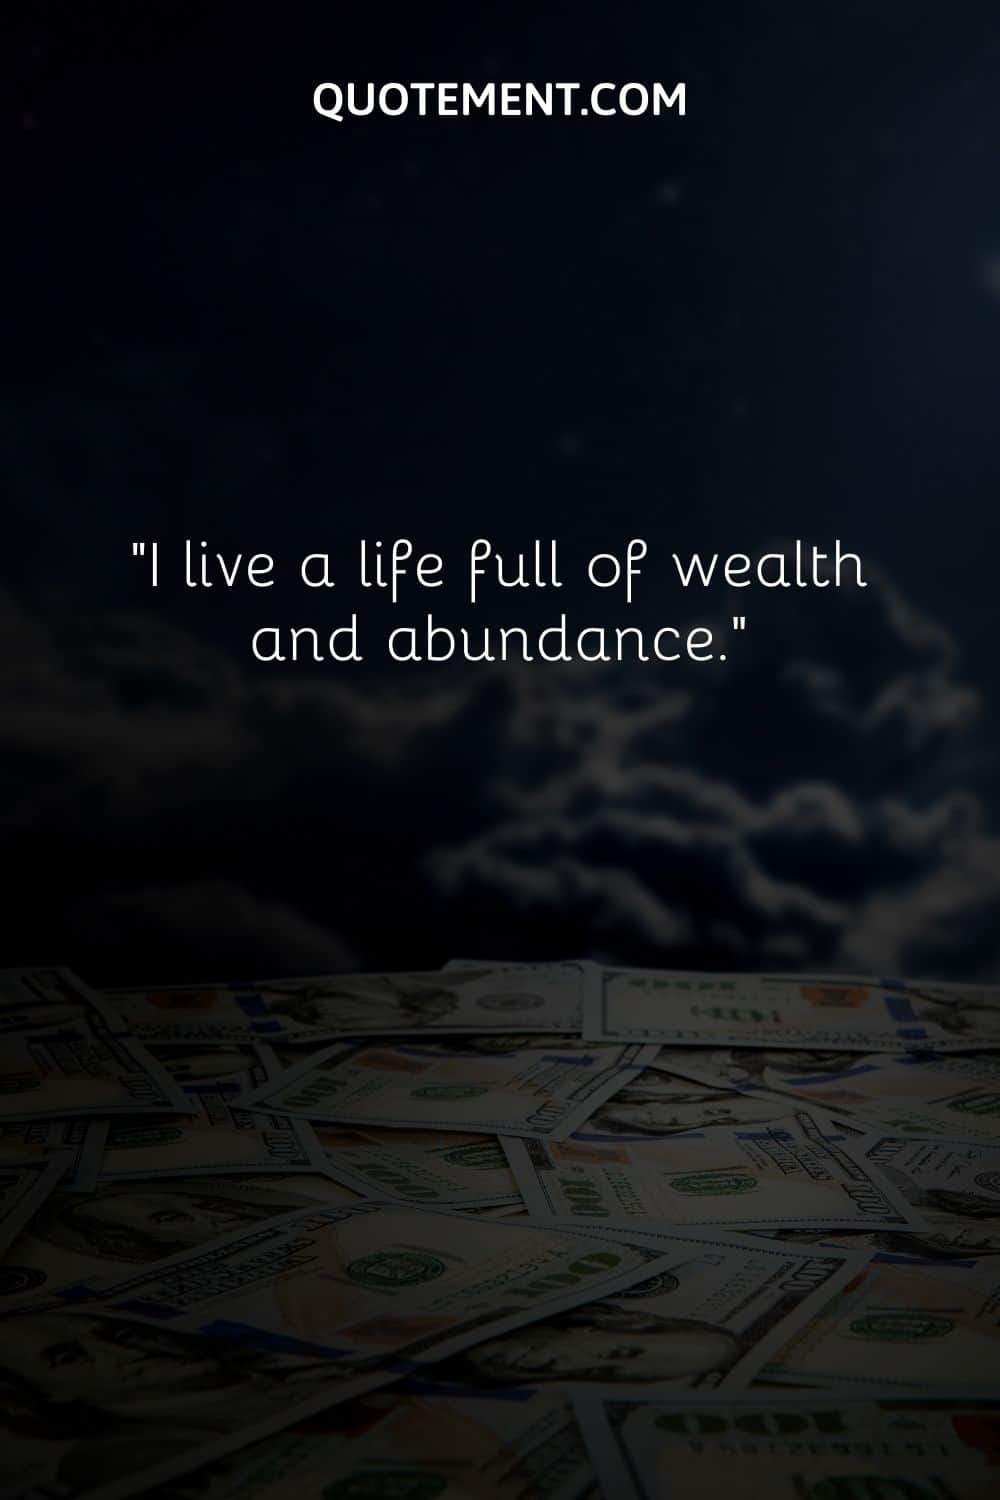 I live a life full of wealth and abundance